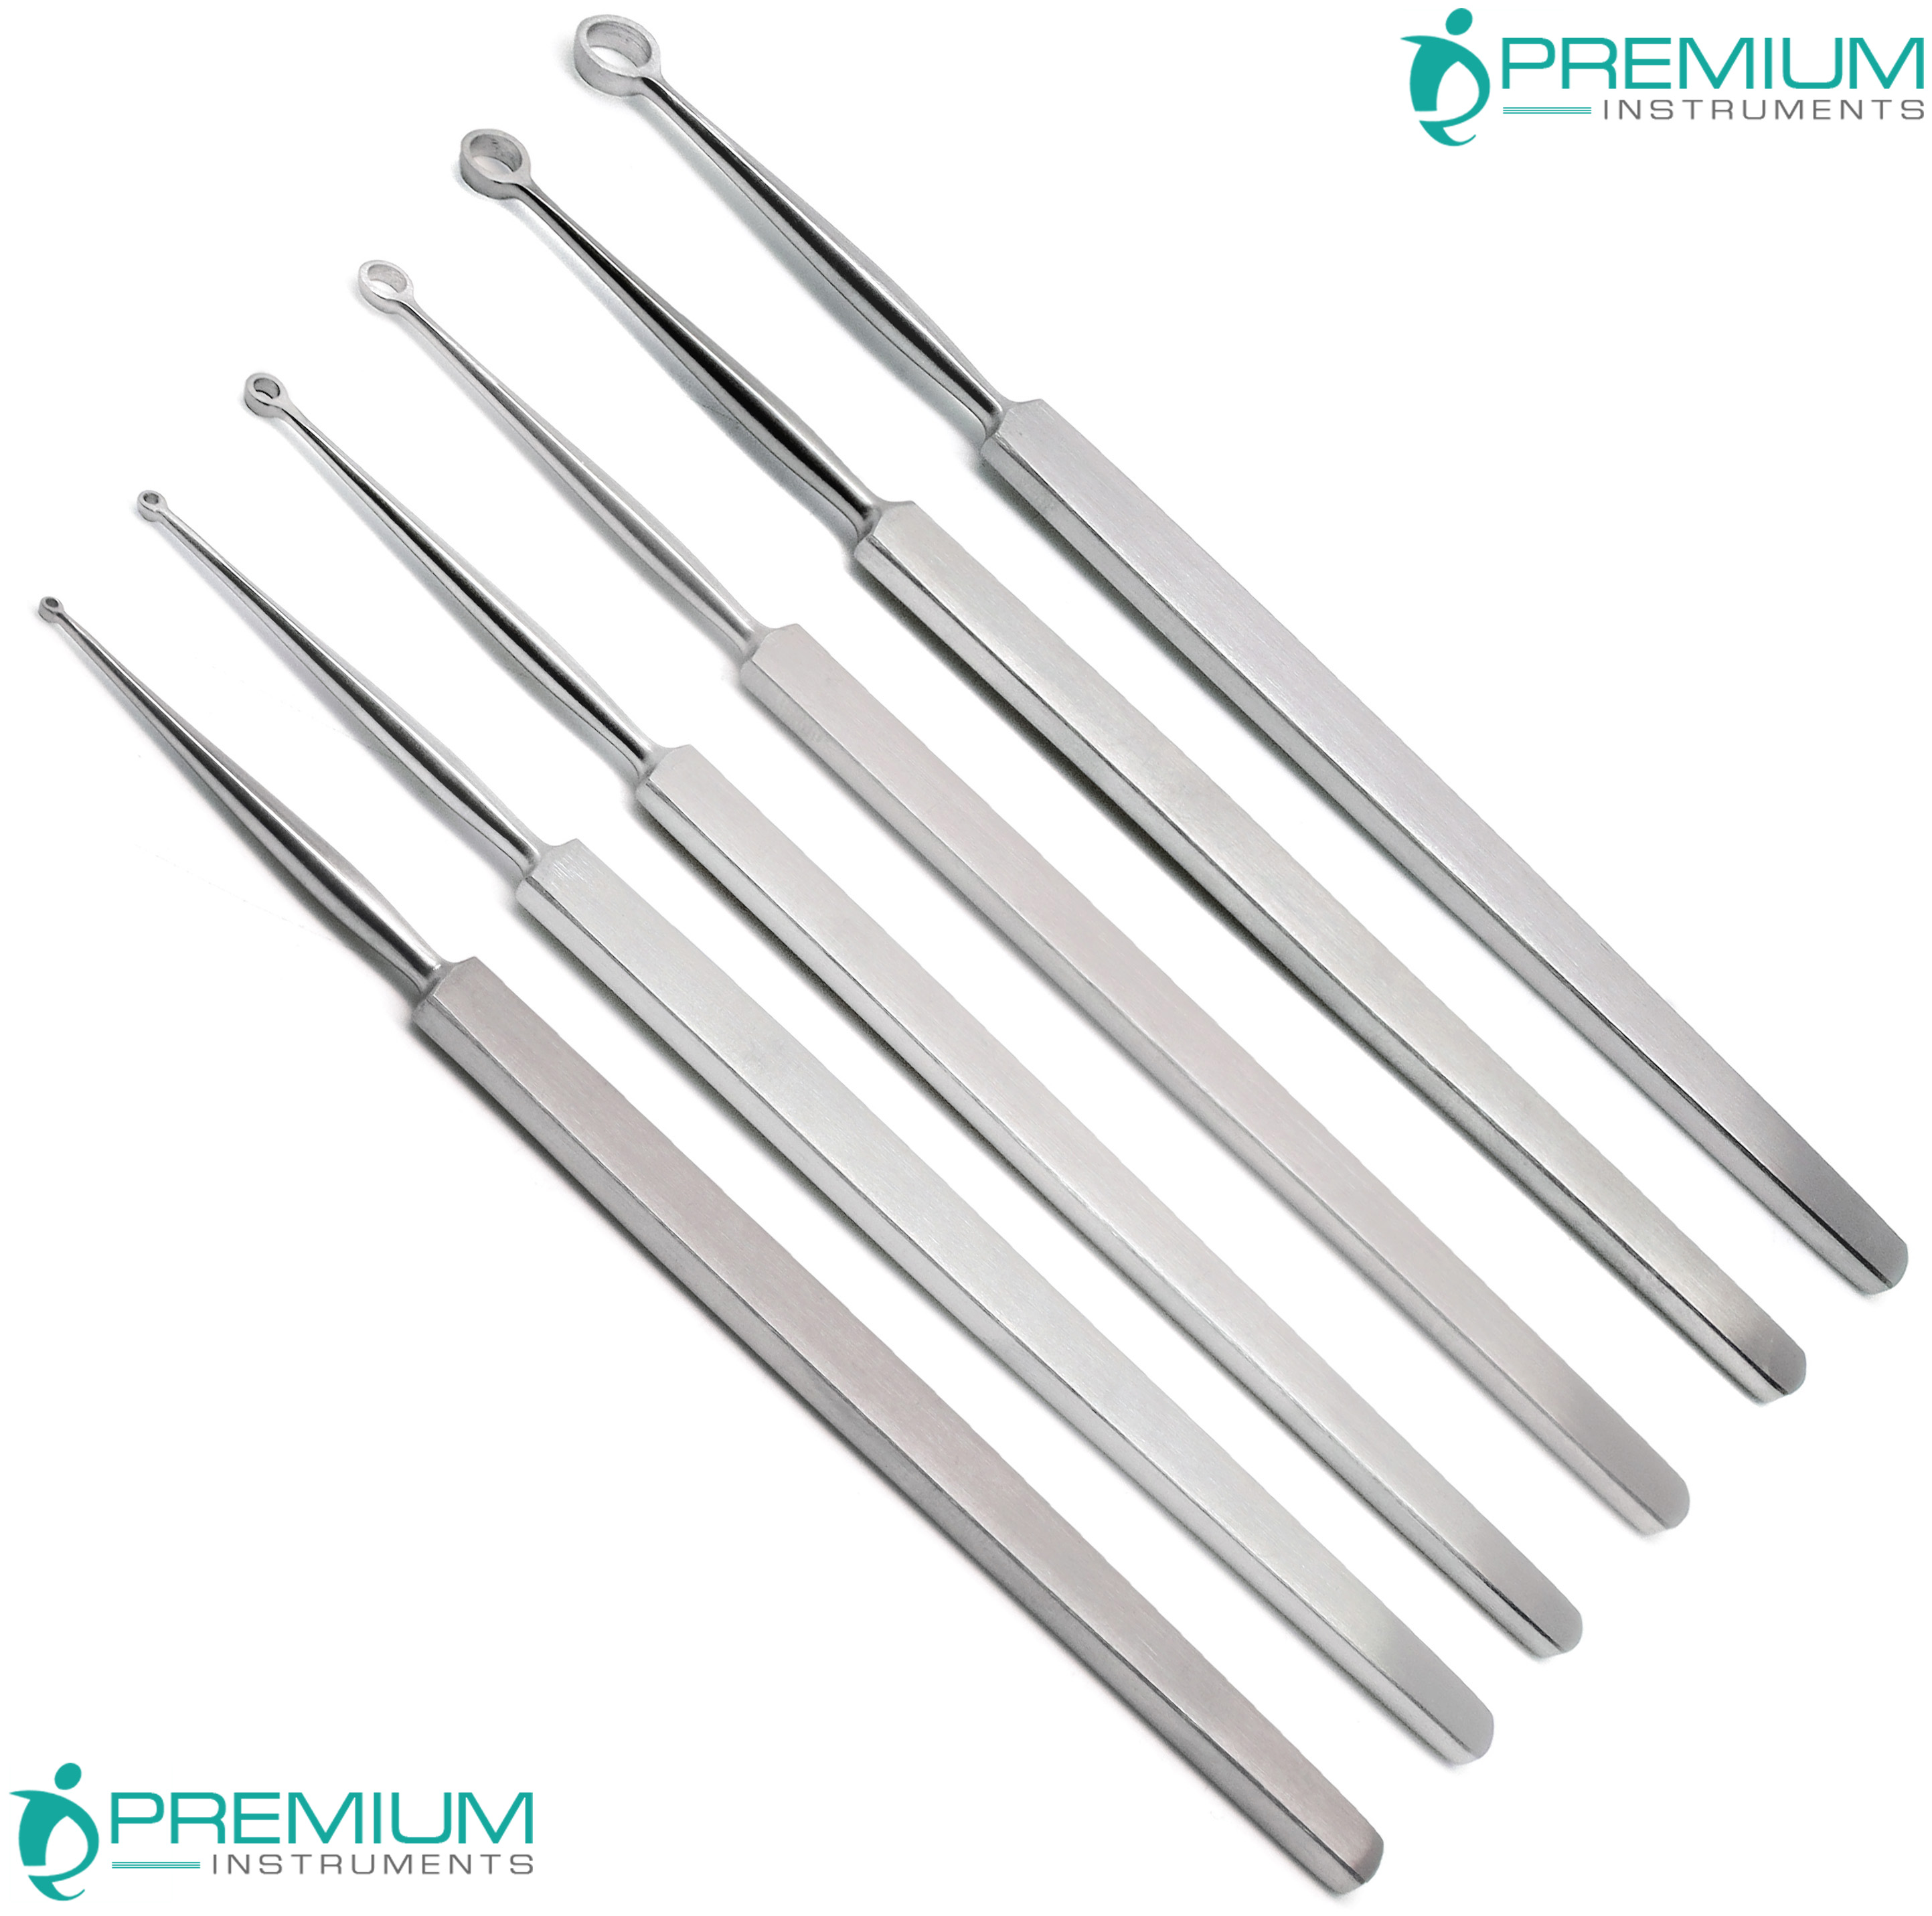 12 Fox Dermal Curette 6mm Surgical Dermatology Instruments 